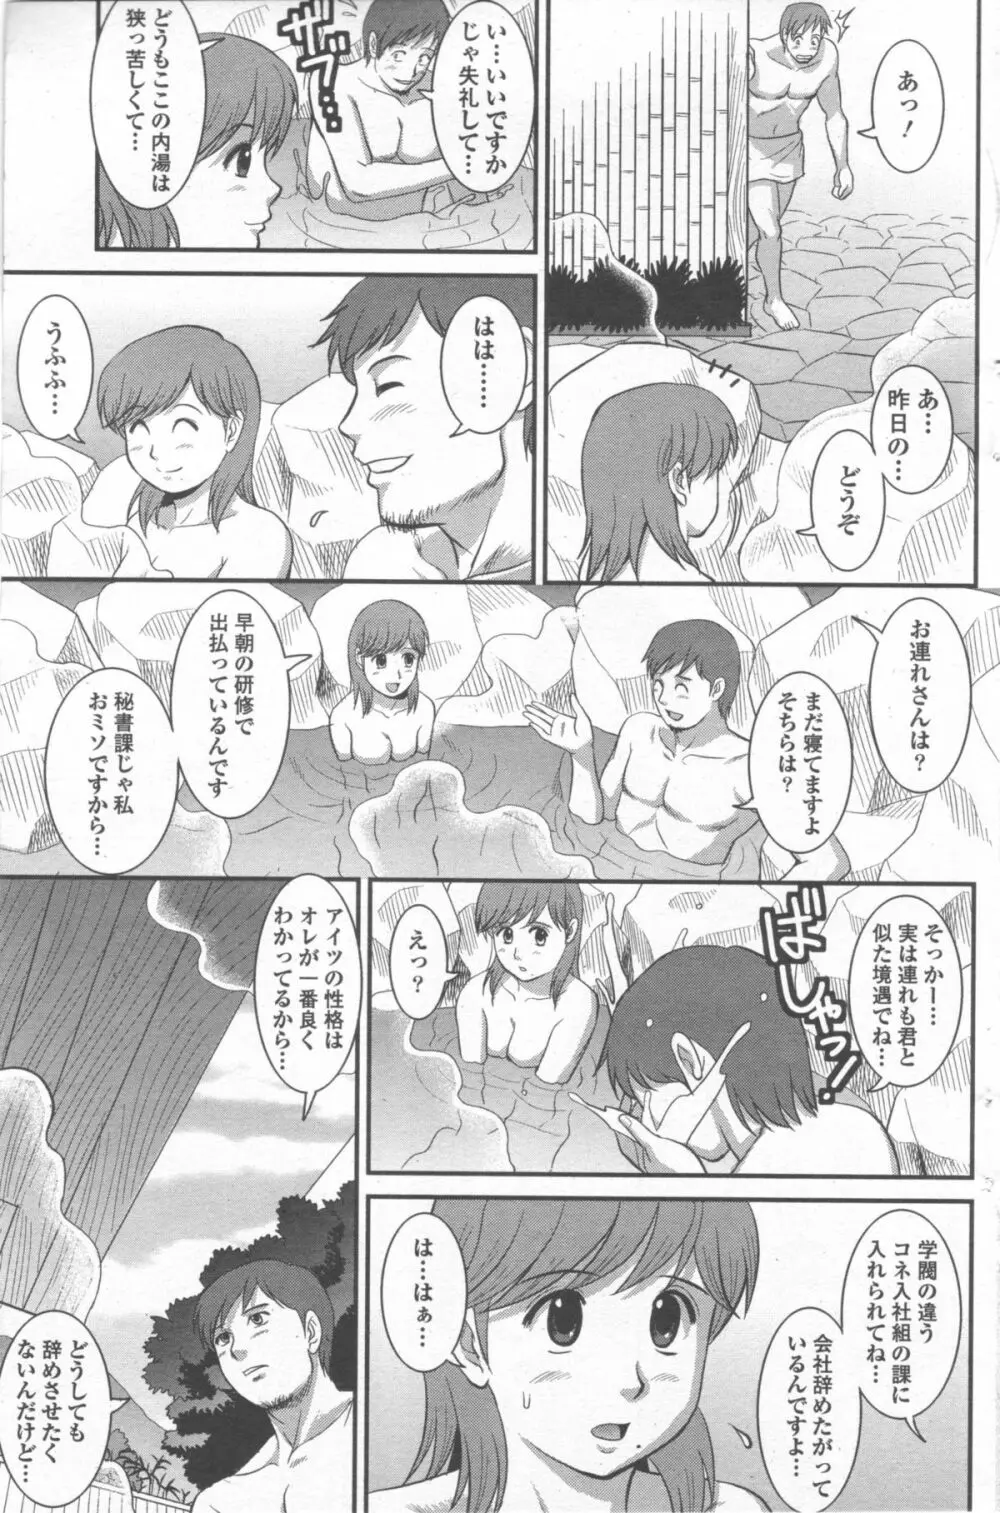 Haken no Muuko-san 9 8ページ